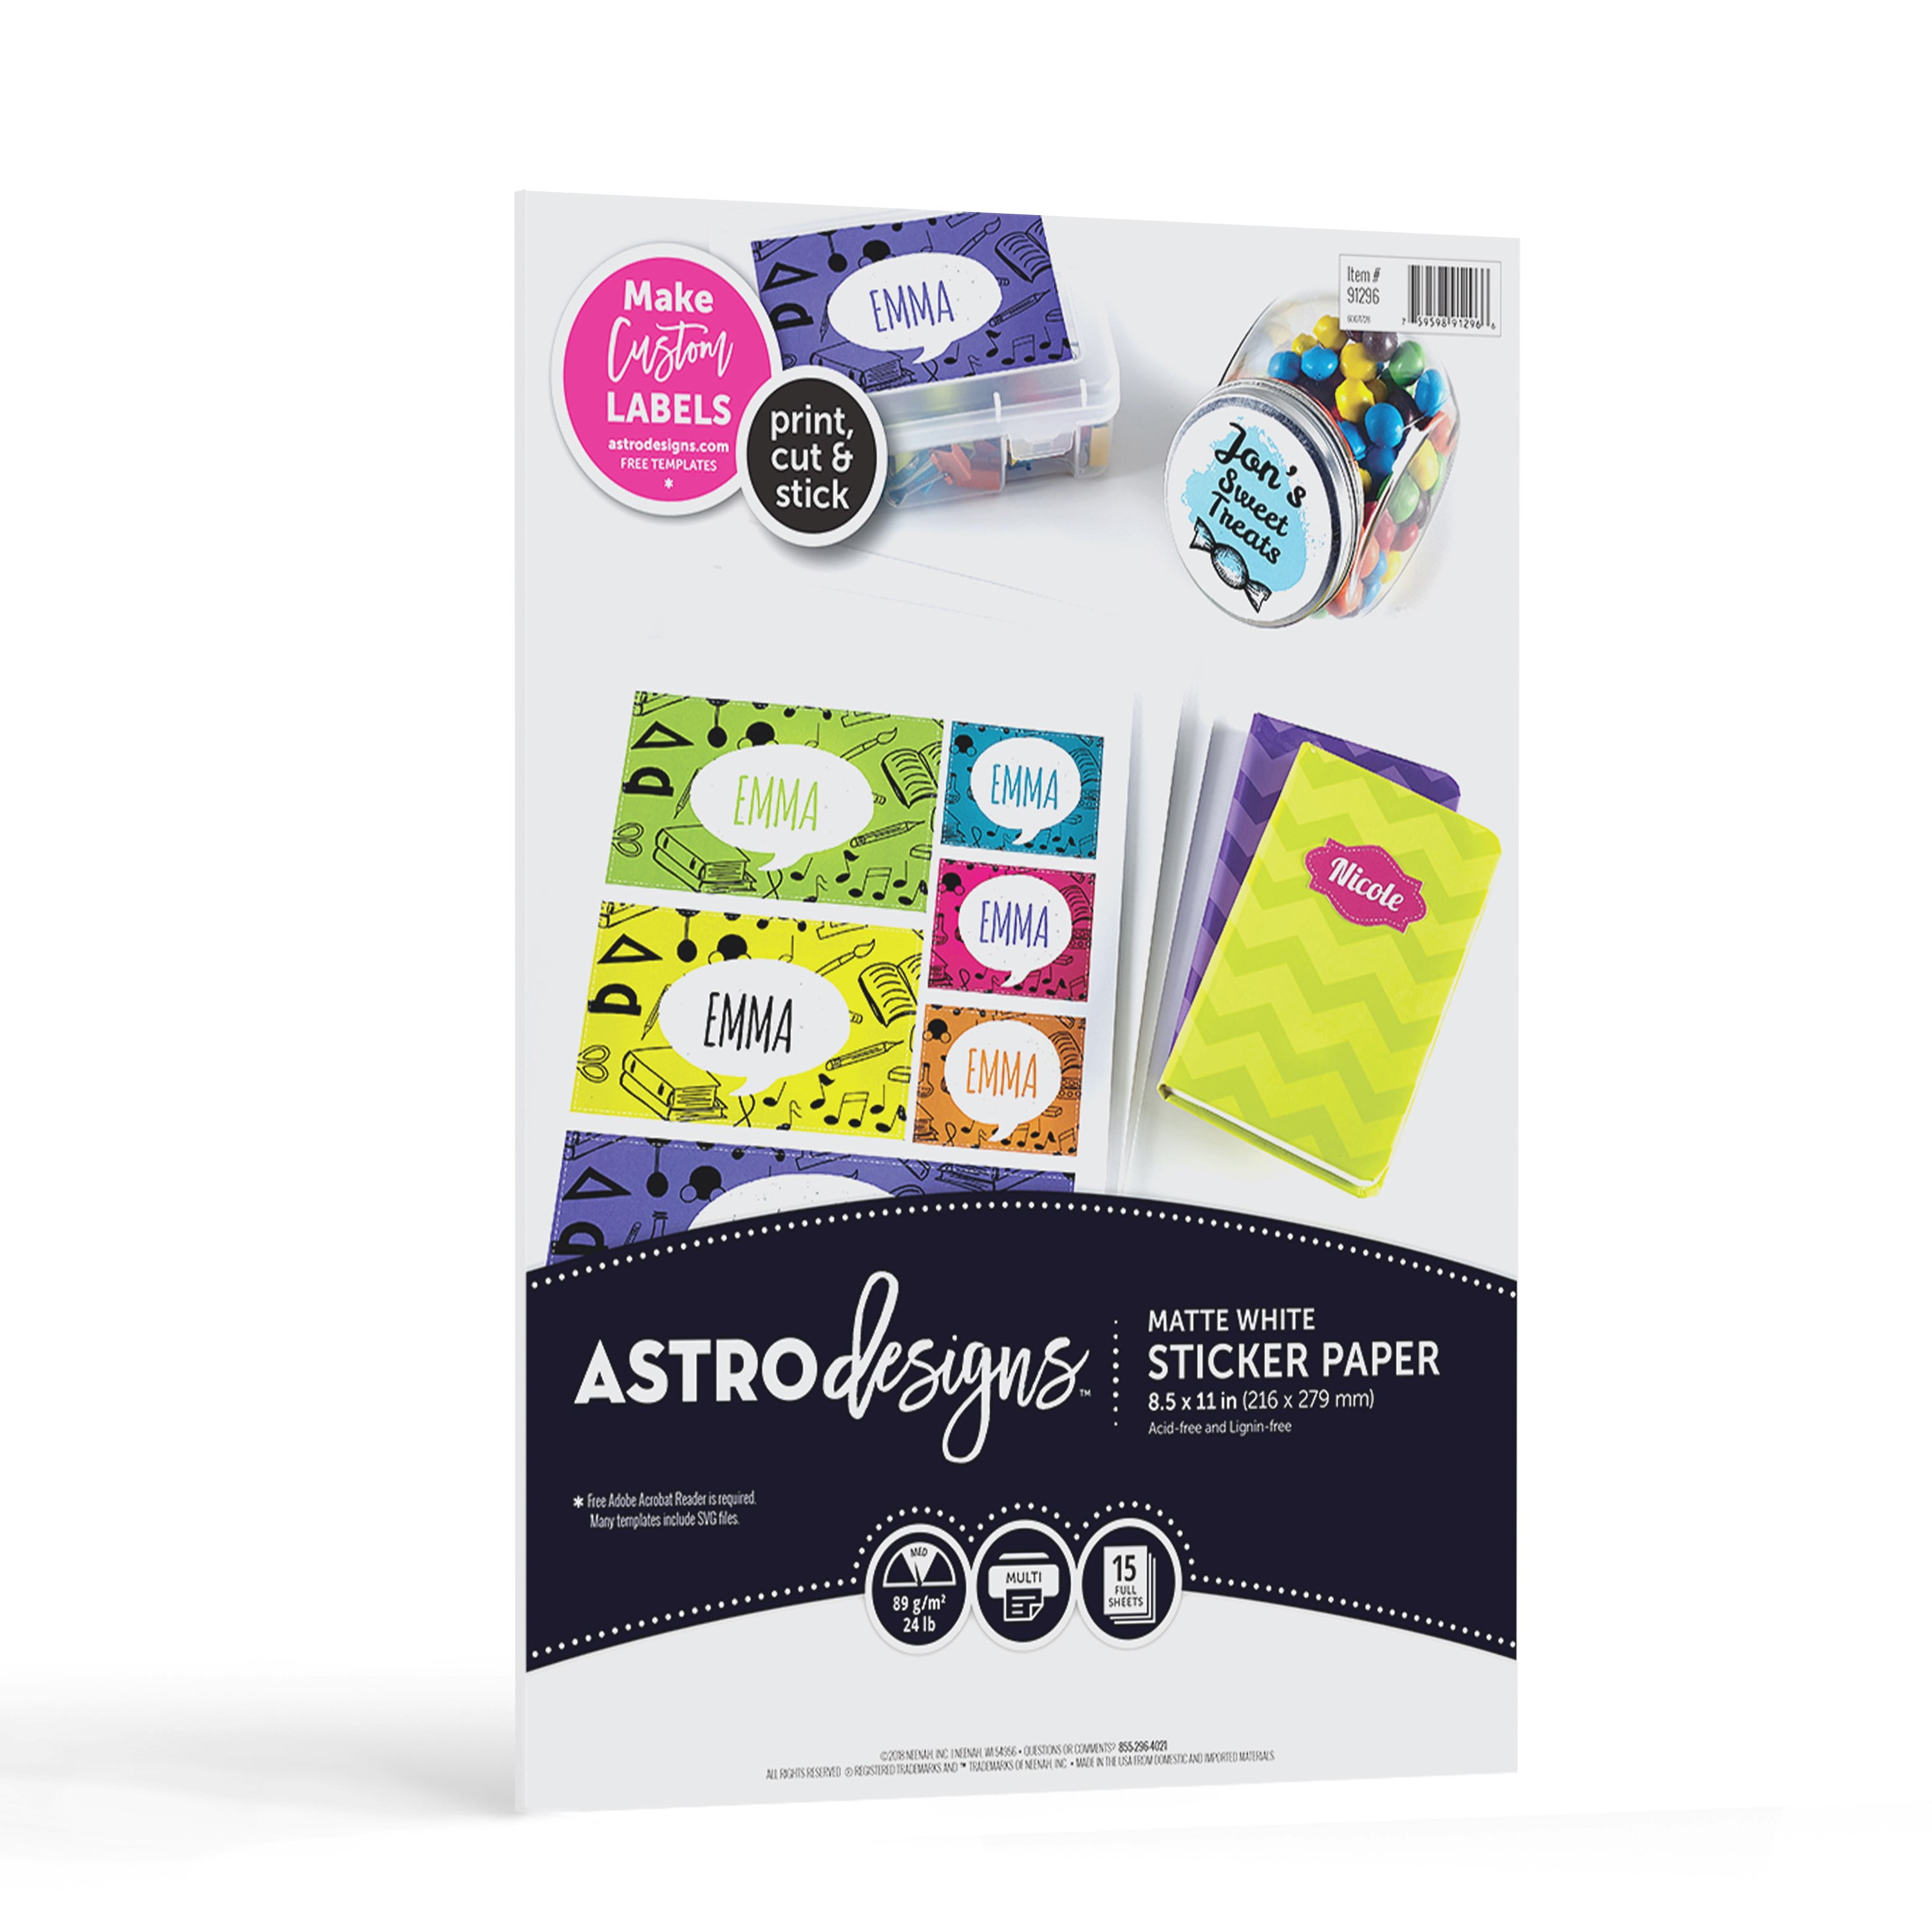 Astrodesigns Sticker Paper Templates